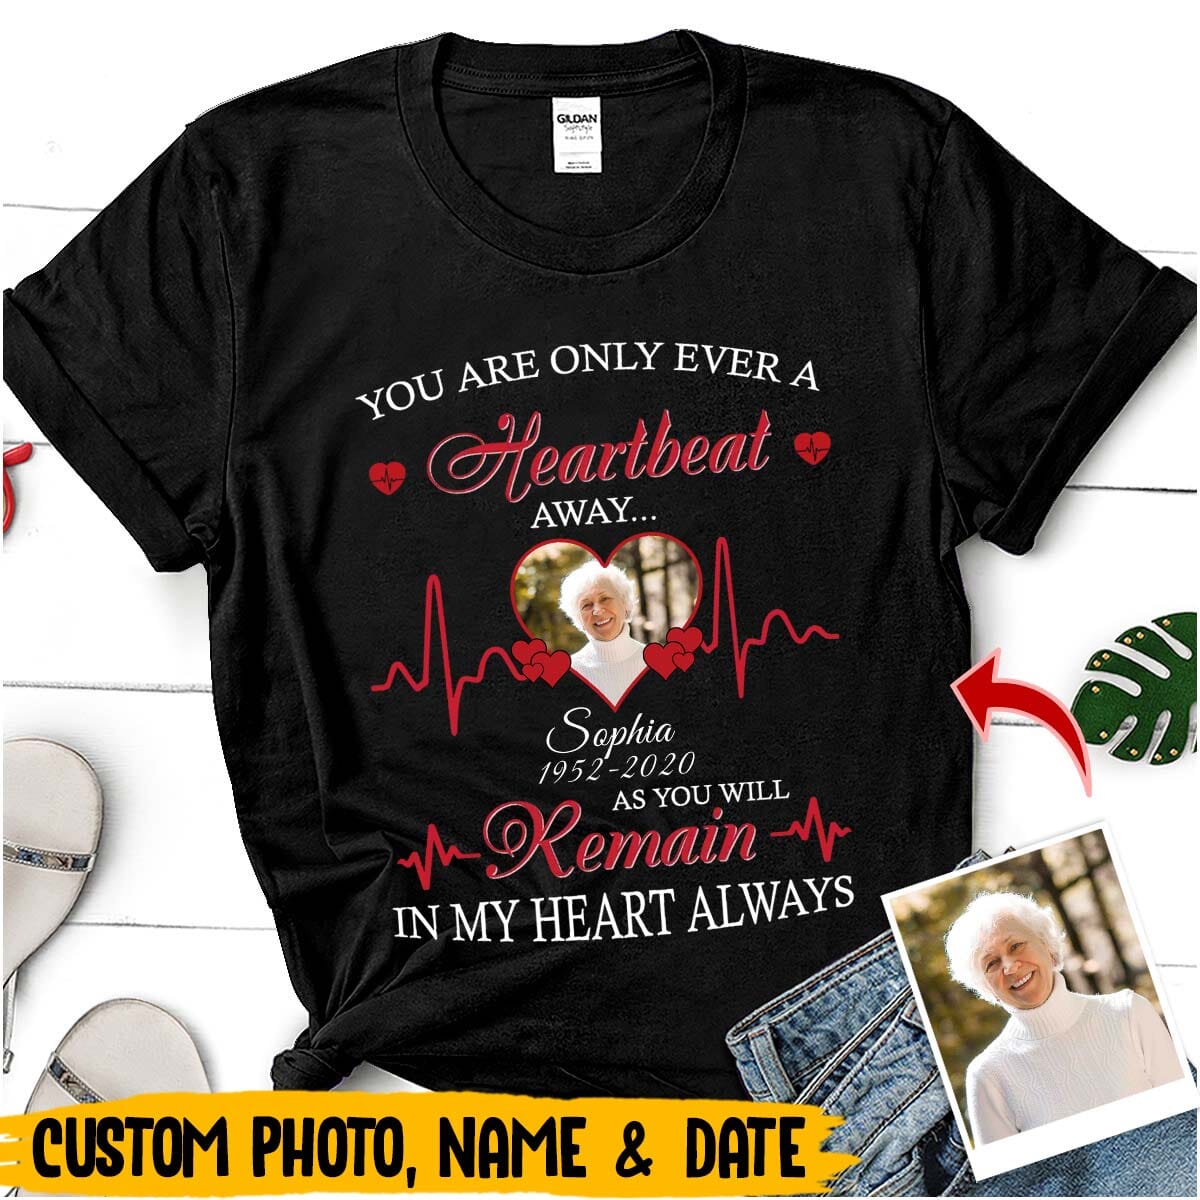 A Heartbeat Away Custom Photo Memorial Personalized T-Shirt